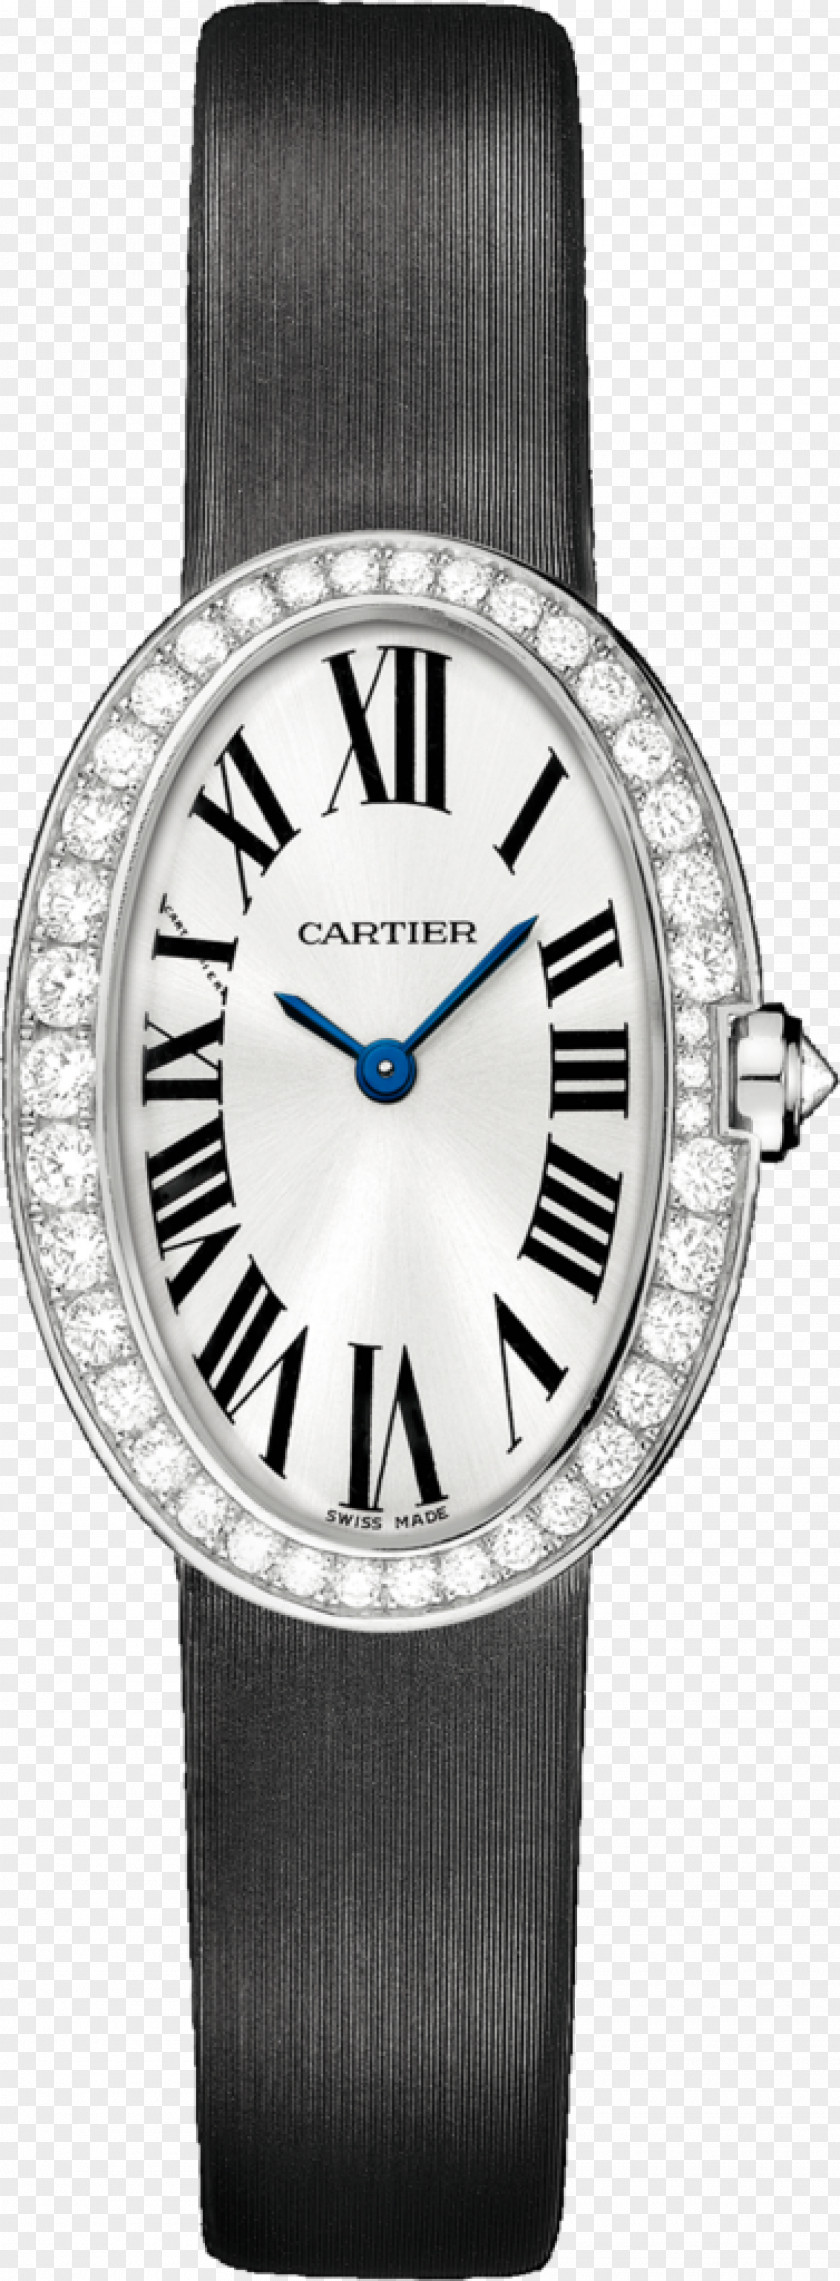 Watch Cartier Jewellery Diamond Cut PNG